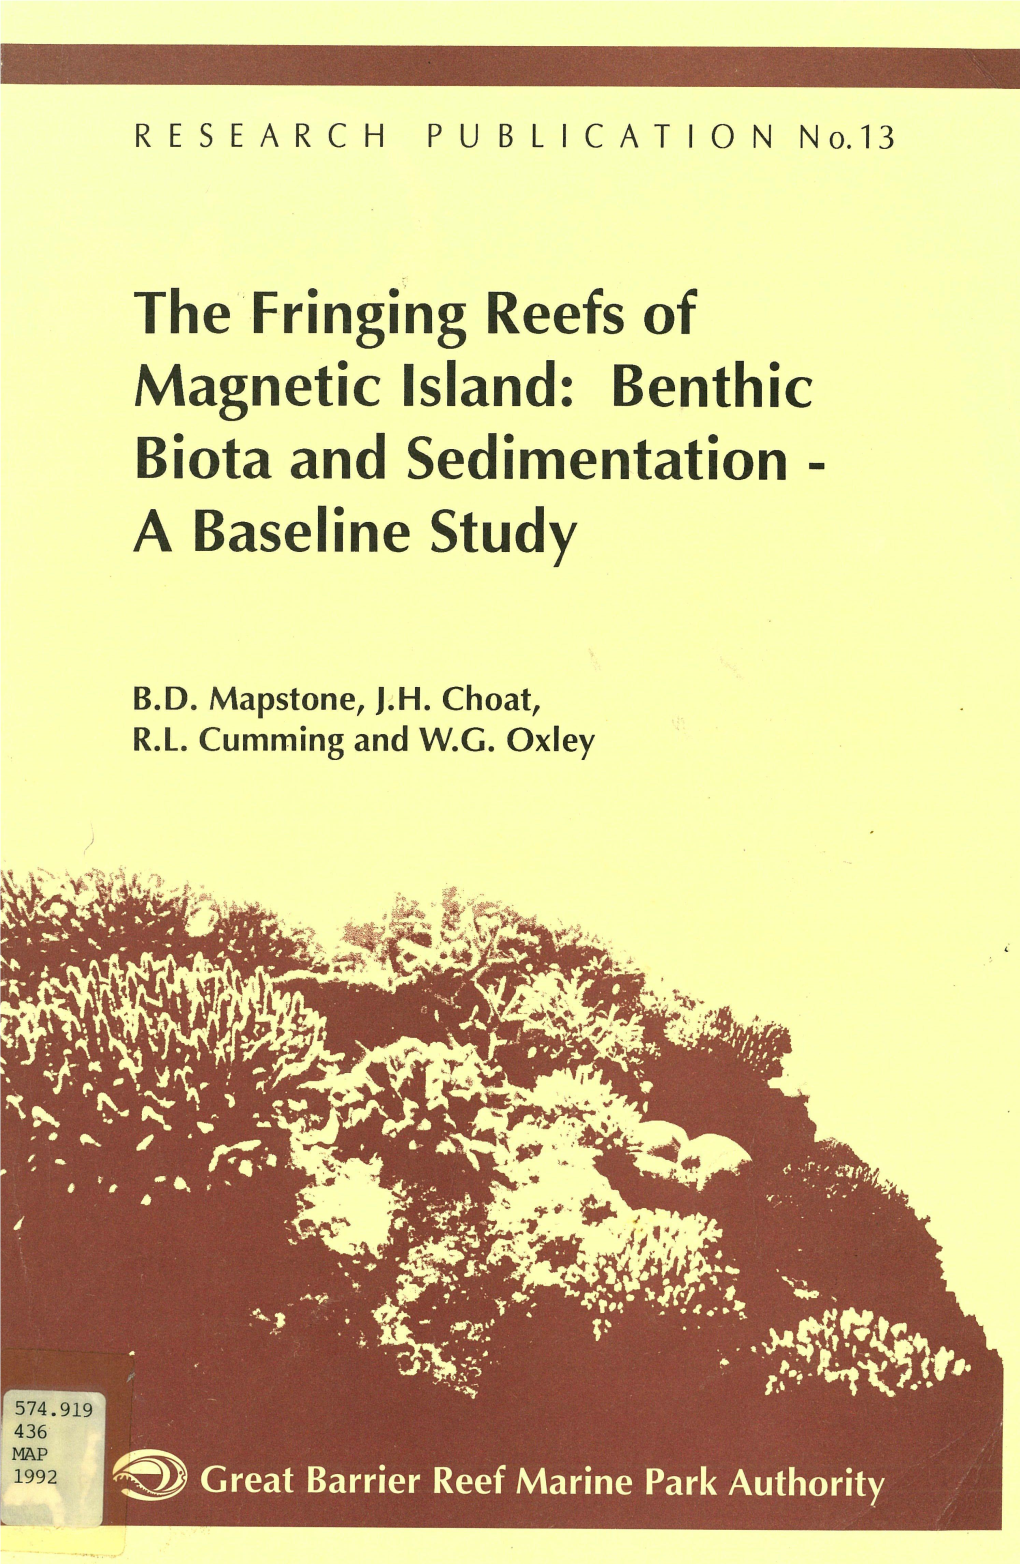 The Fringing Reefs of Magnetic Island: Benthic Biota and Sedimentation - a Baseline Study